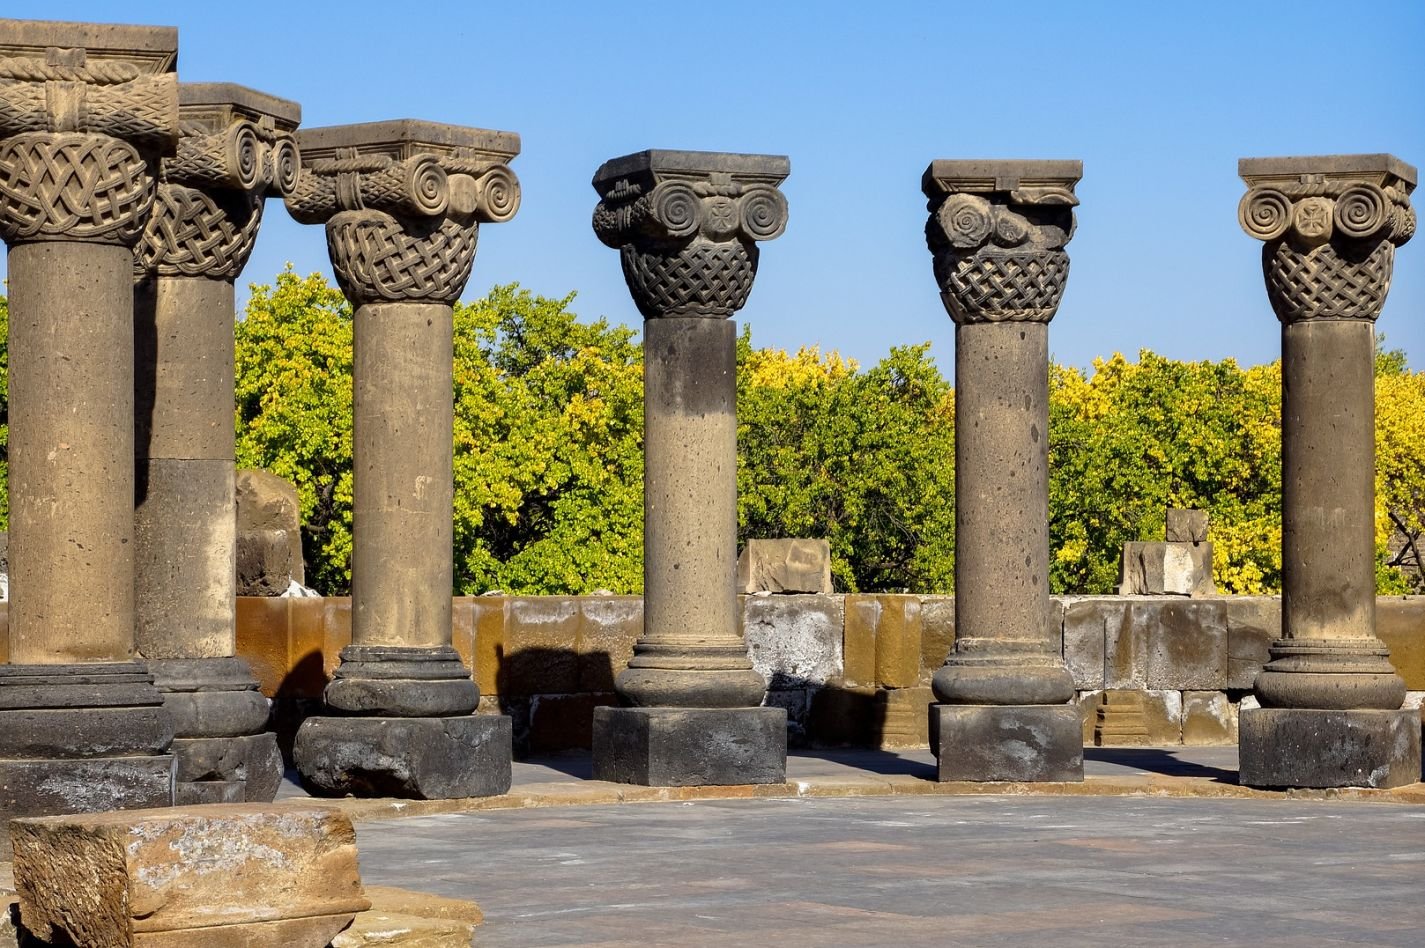 Columns in Armenia